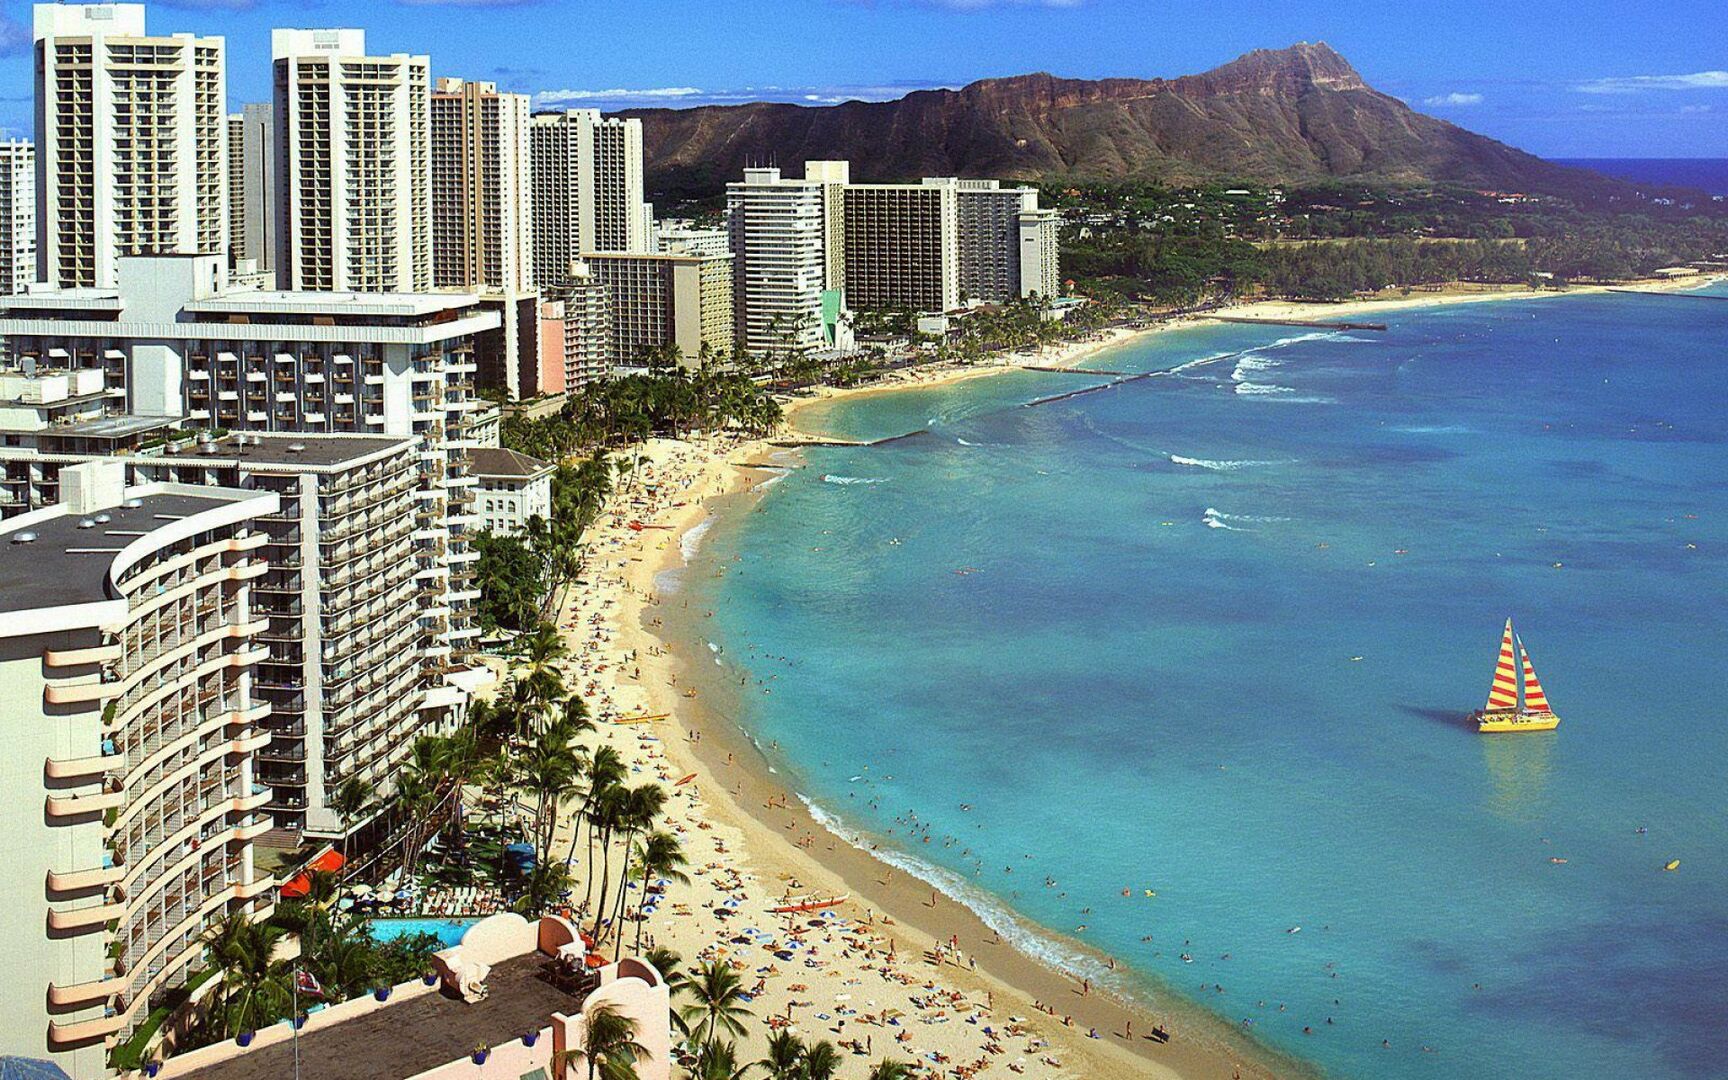 Waikiki Beach and Diamond Head in the background